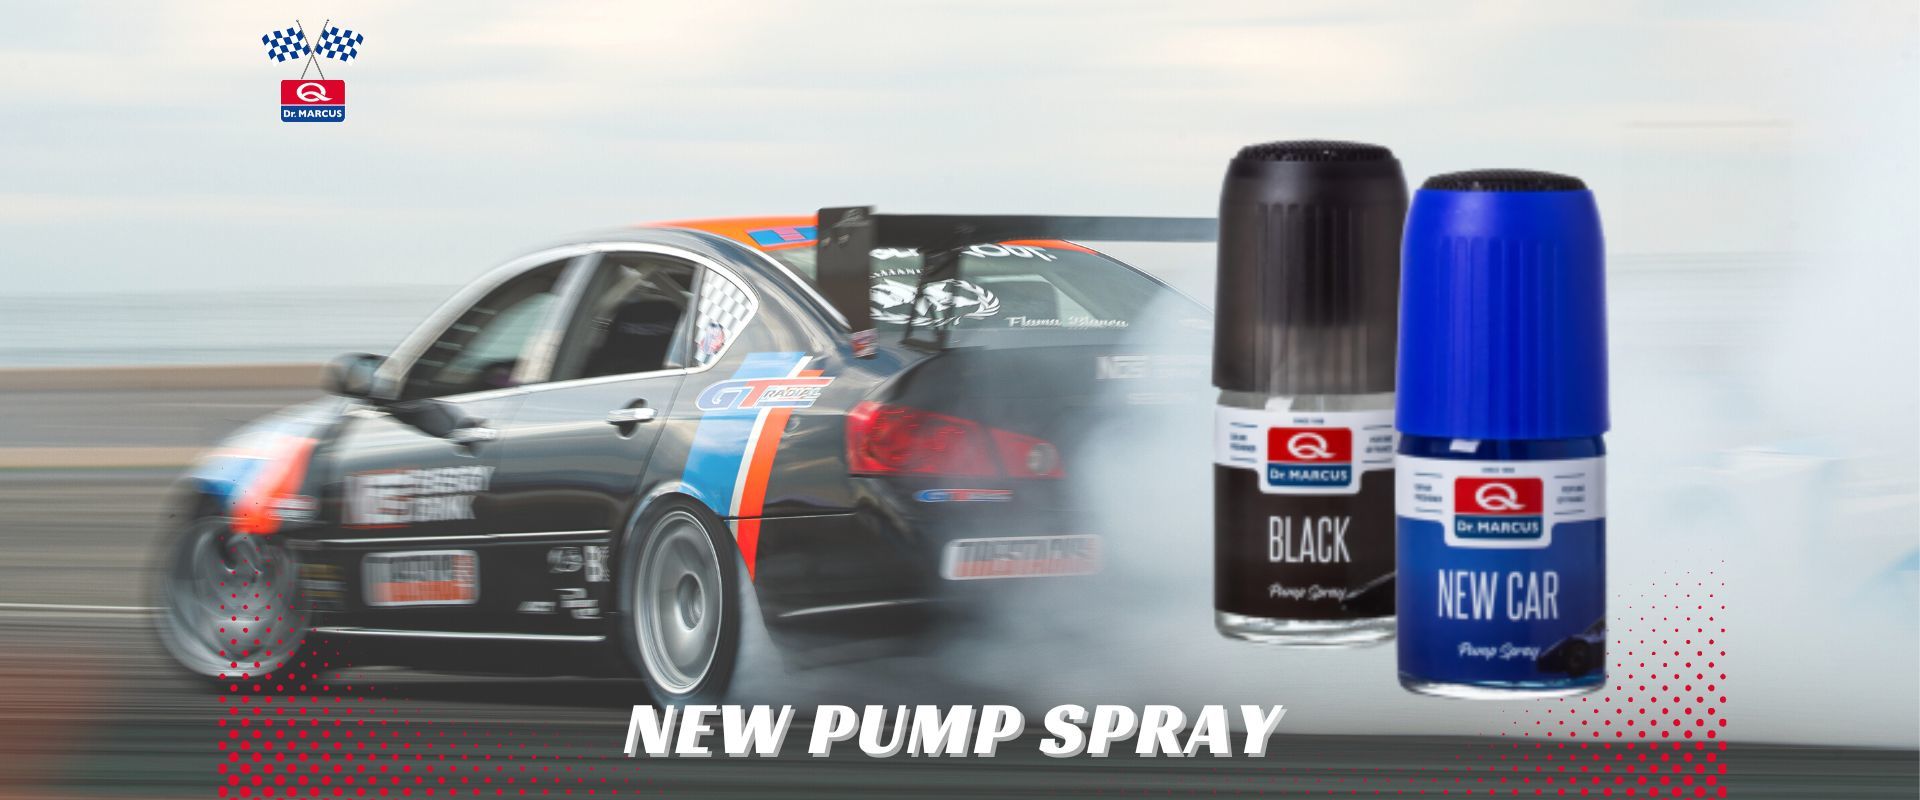 BLACK smell NEW CAR pump spray Dr.MARCUS High QUALITY AIR